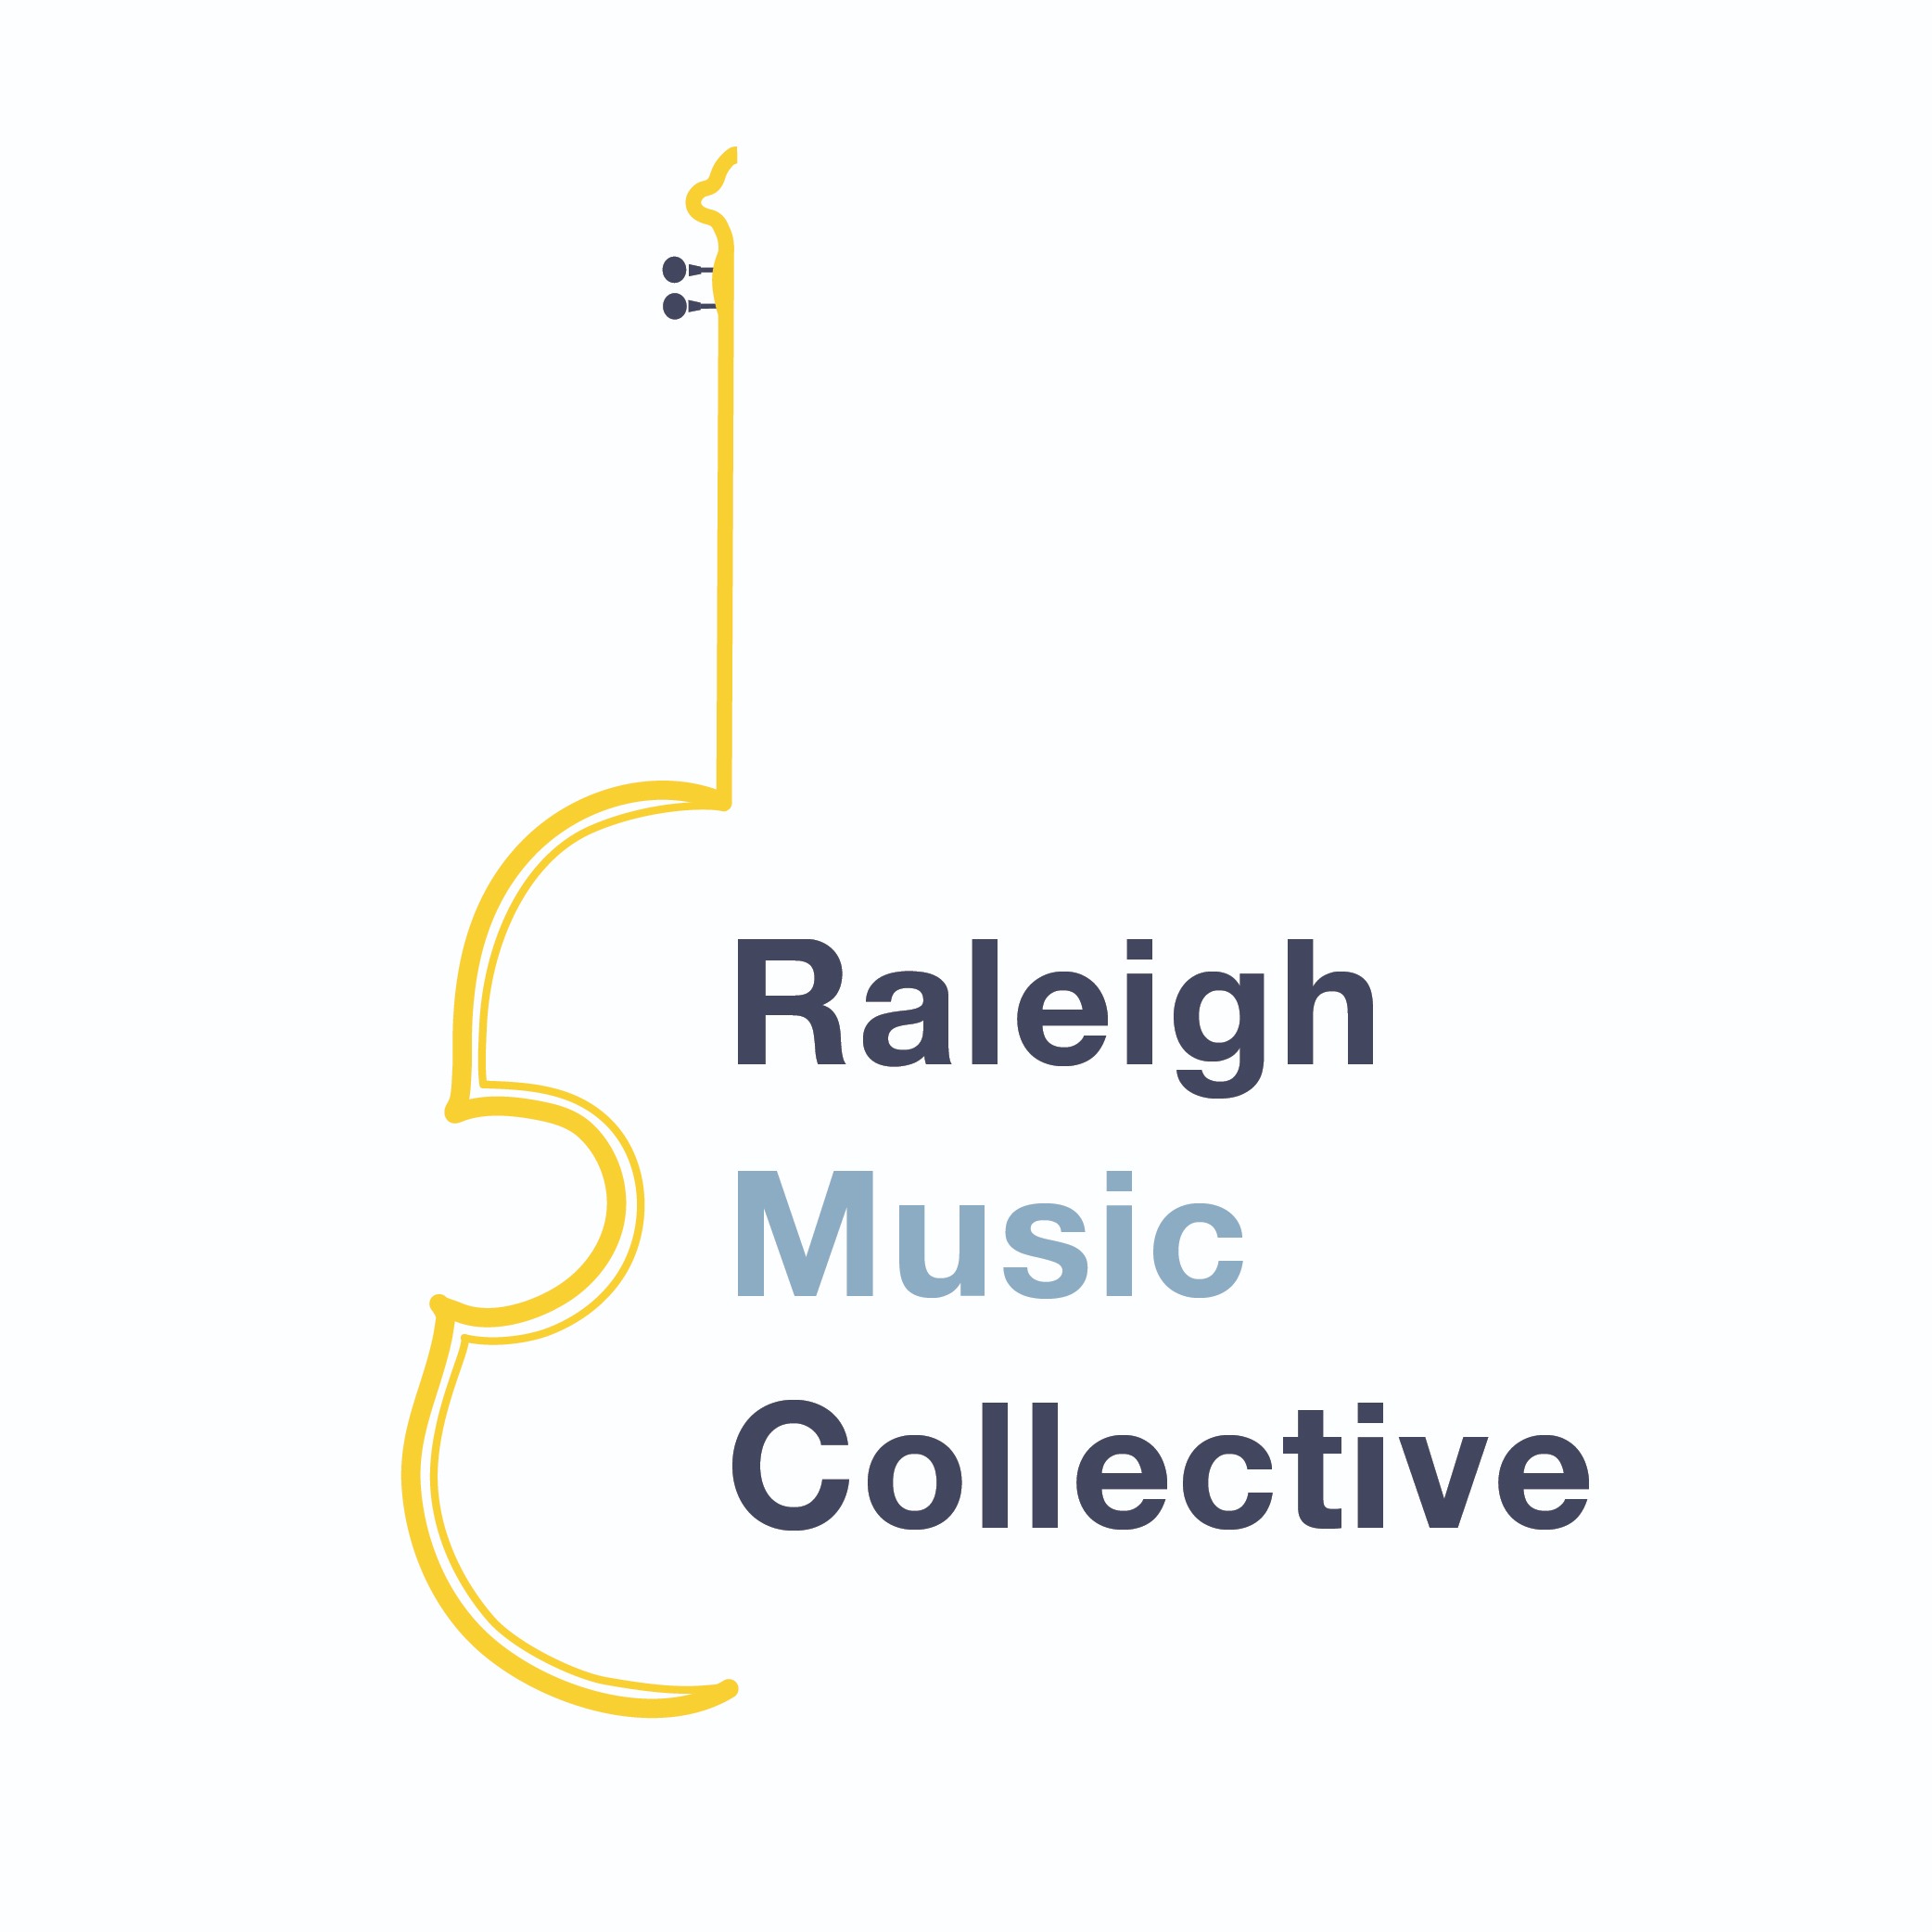 The Raleigh Music Collective logo